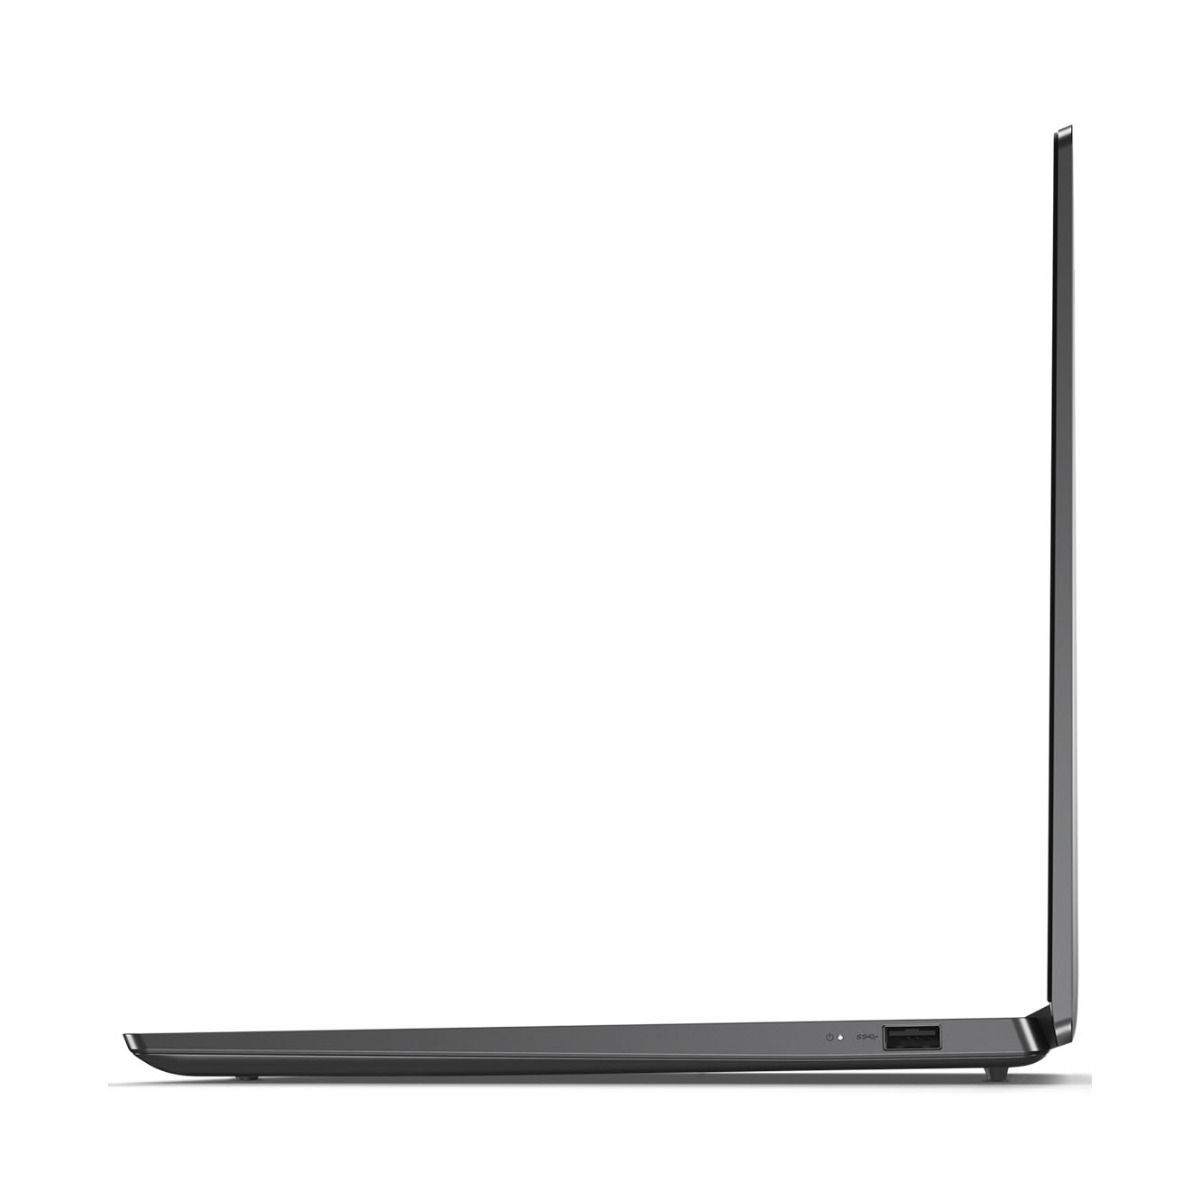 Lenovo Yoga 14" Laptop S740-14IIL Intel Core i7 10th Gen 8GB RAM 512GB SSD